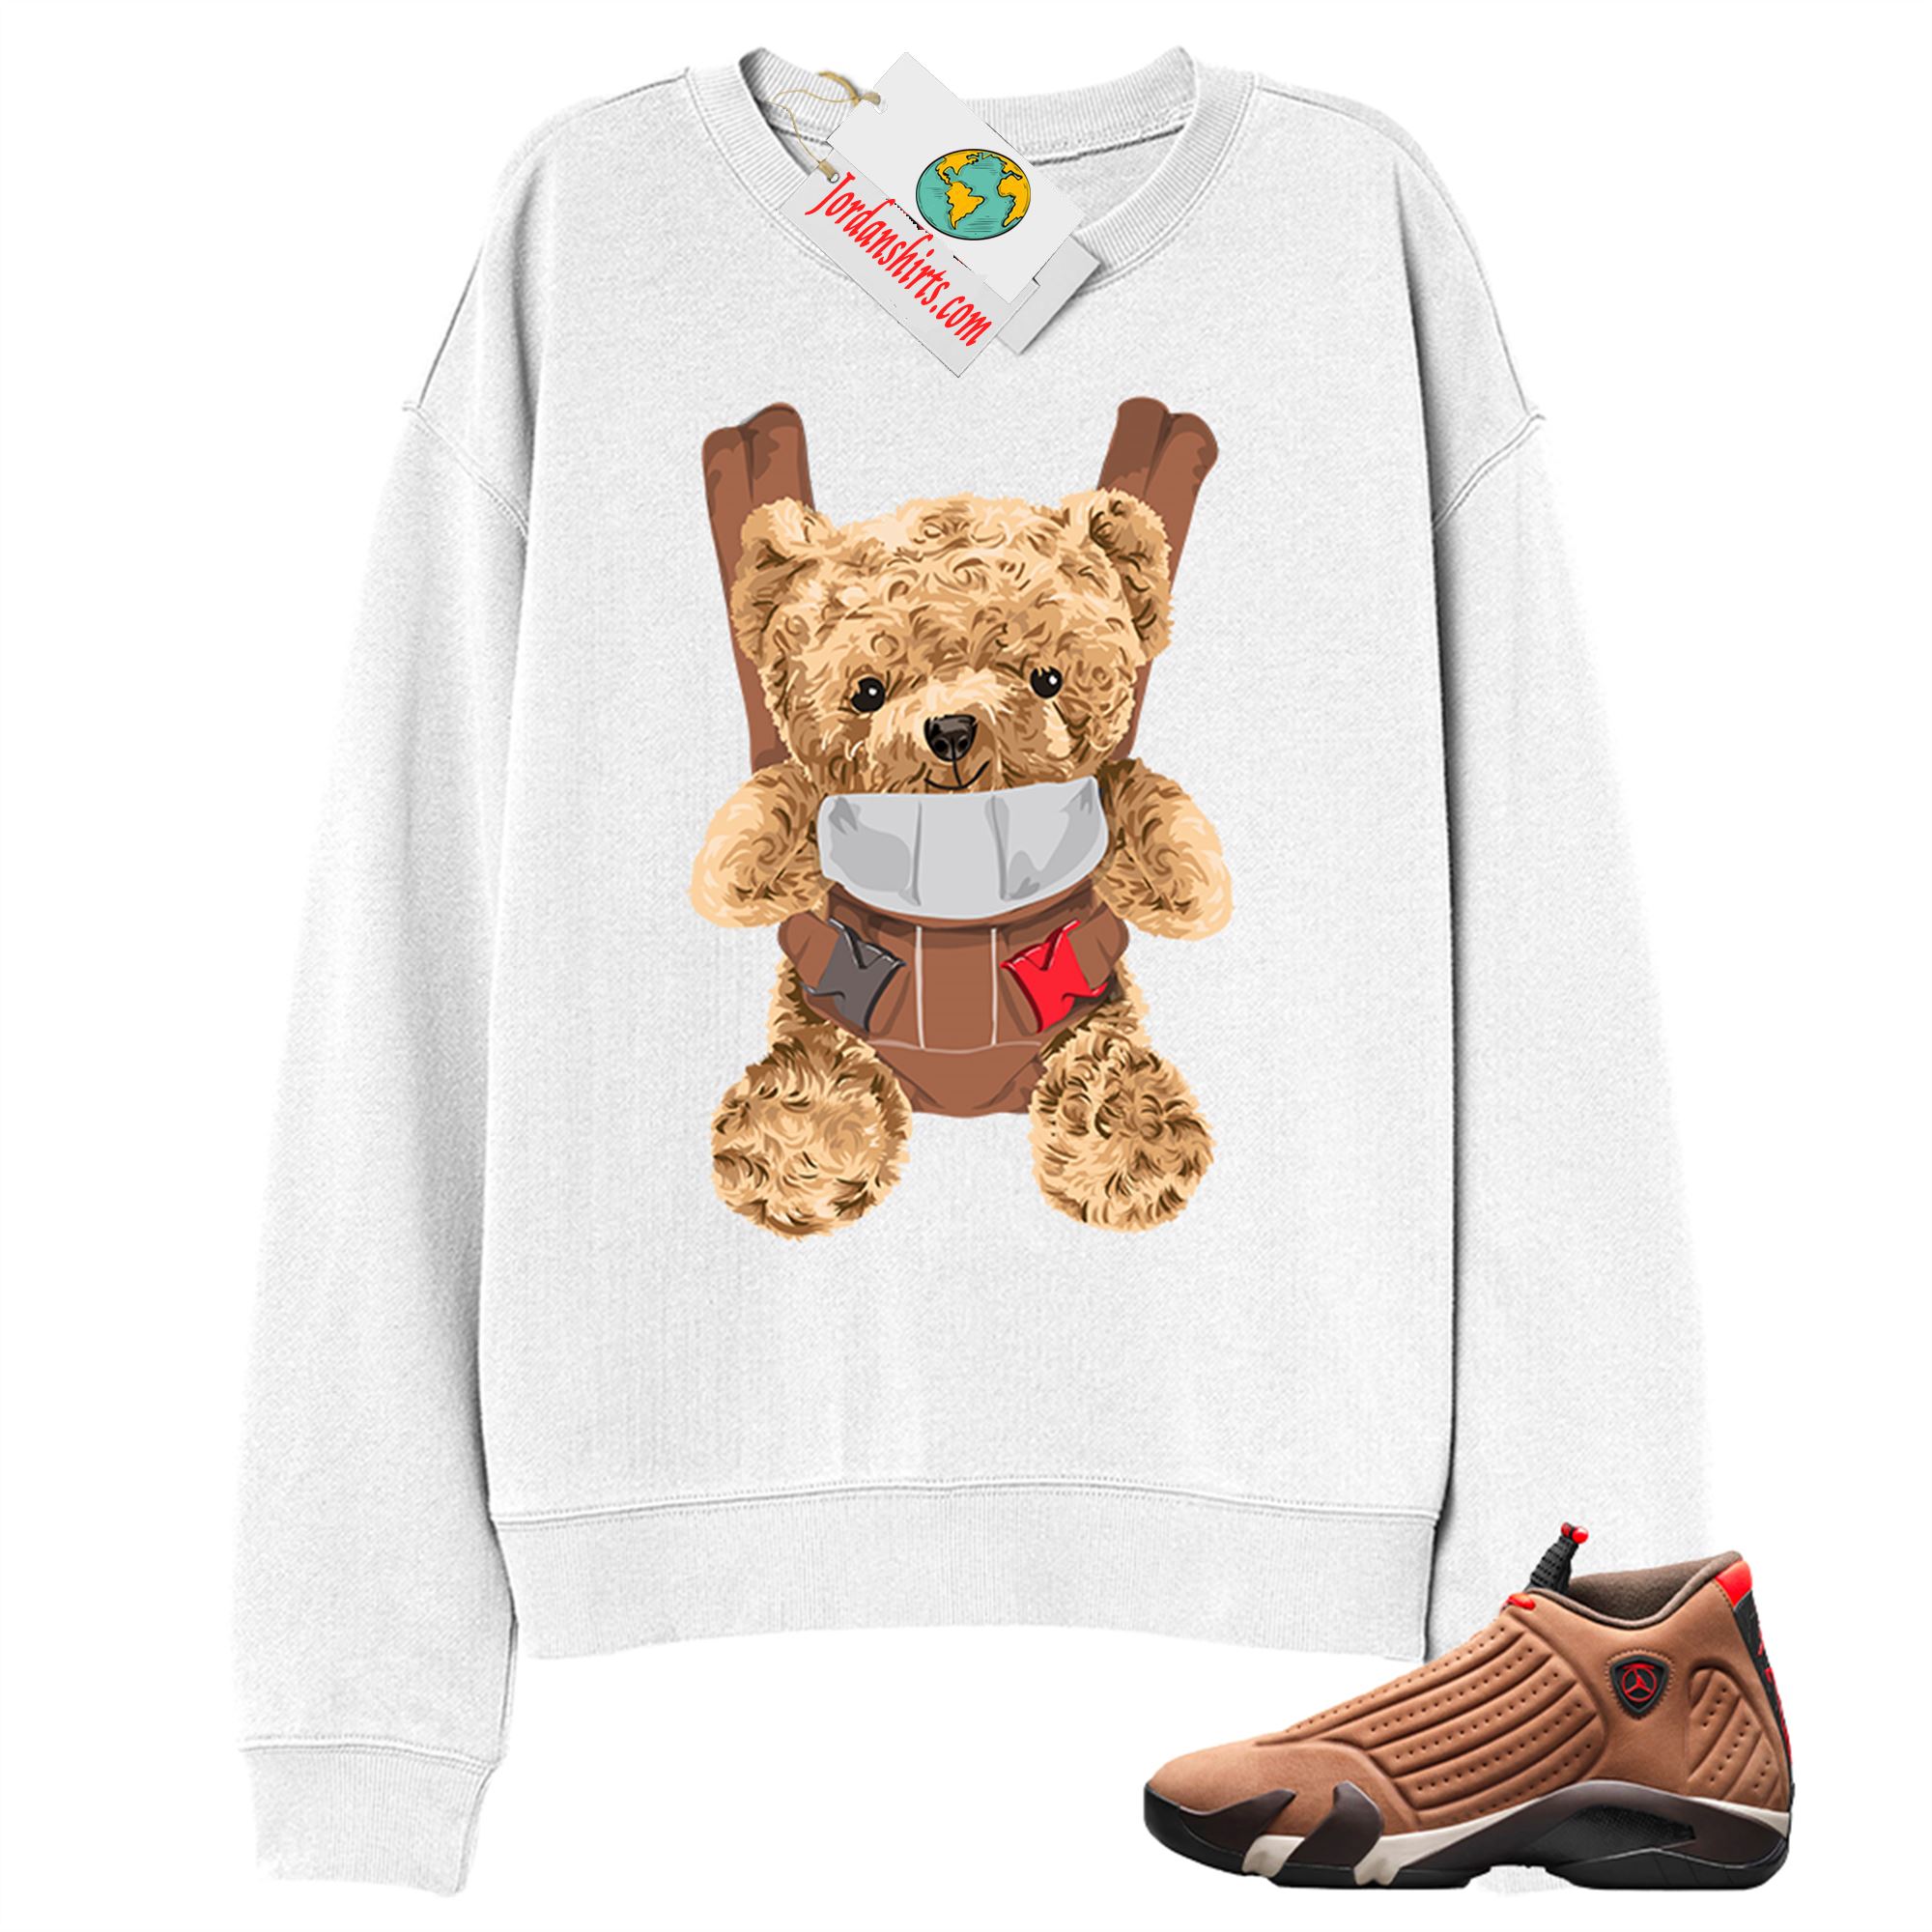 Jordan 14 Sweatshirt, Teddy Bear Bag White Sweatshirt Air Jordan 14 Winterized 14s Plus Size Up To 5xl